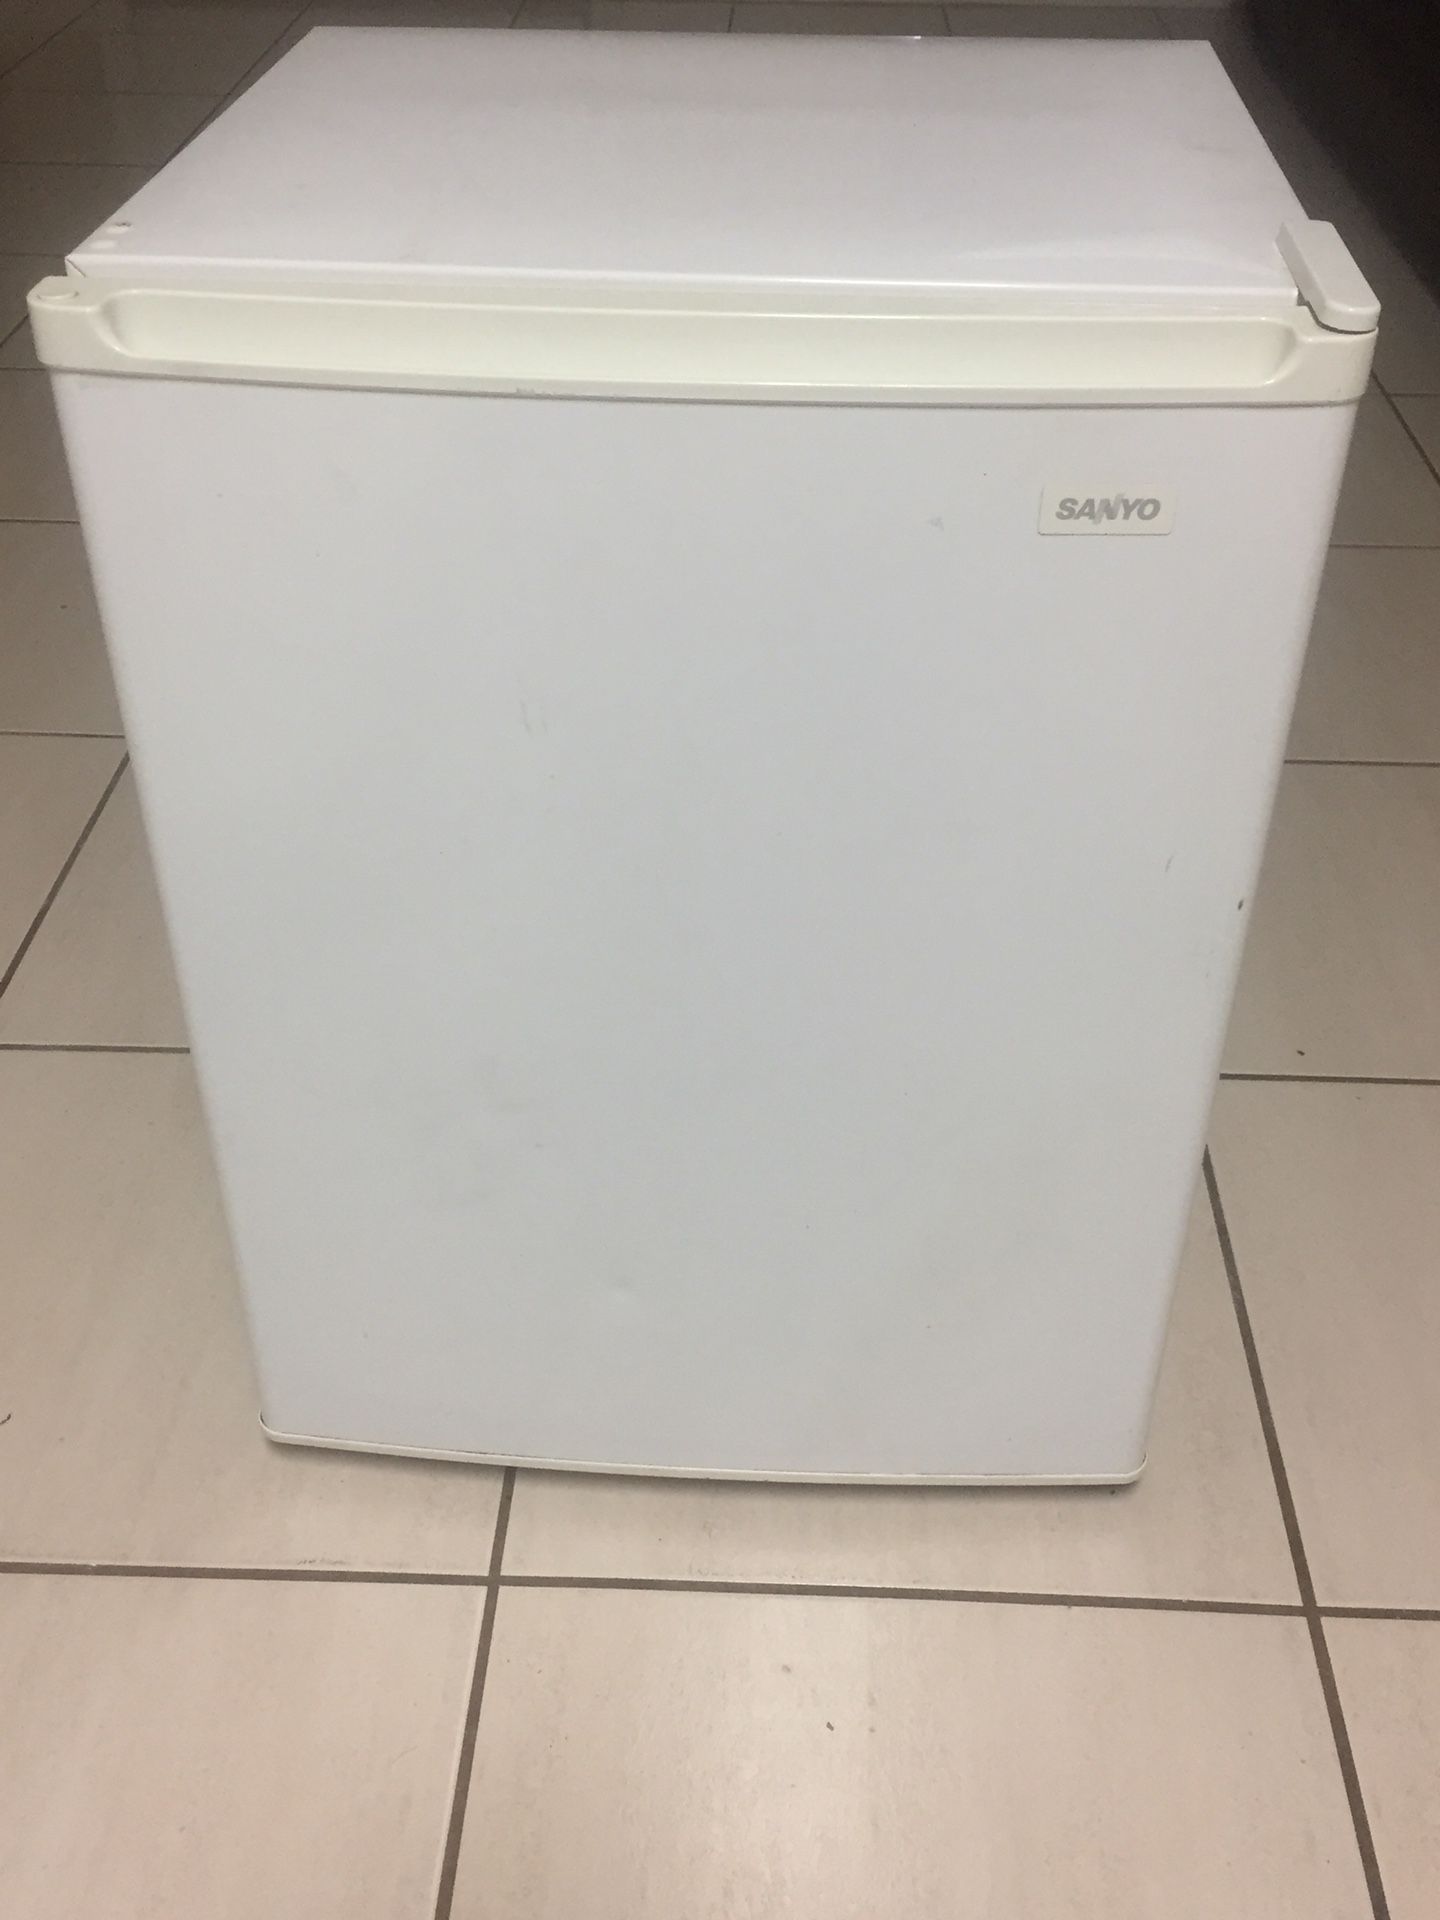 Mini fridge Sanyo